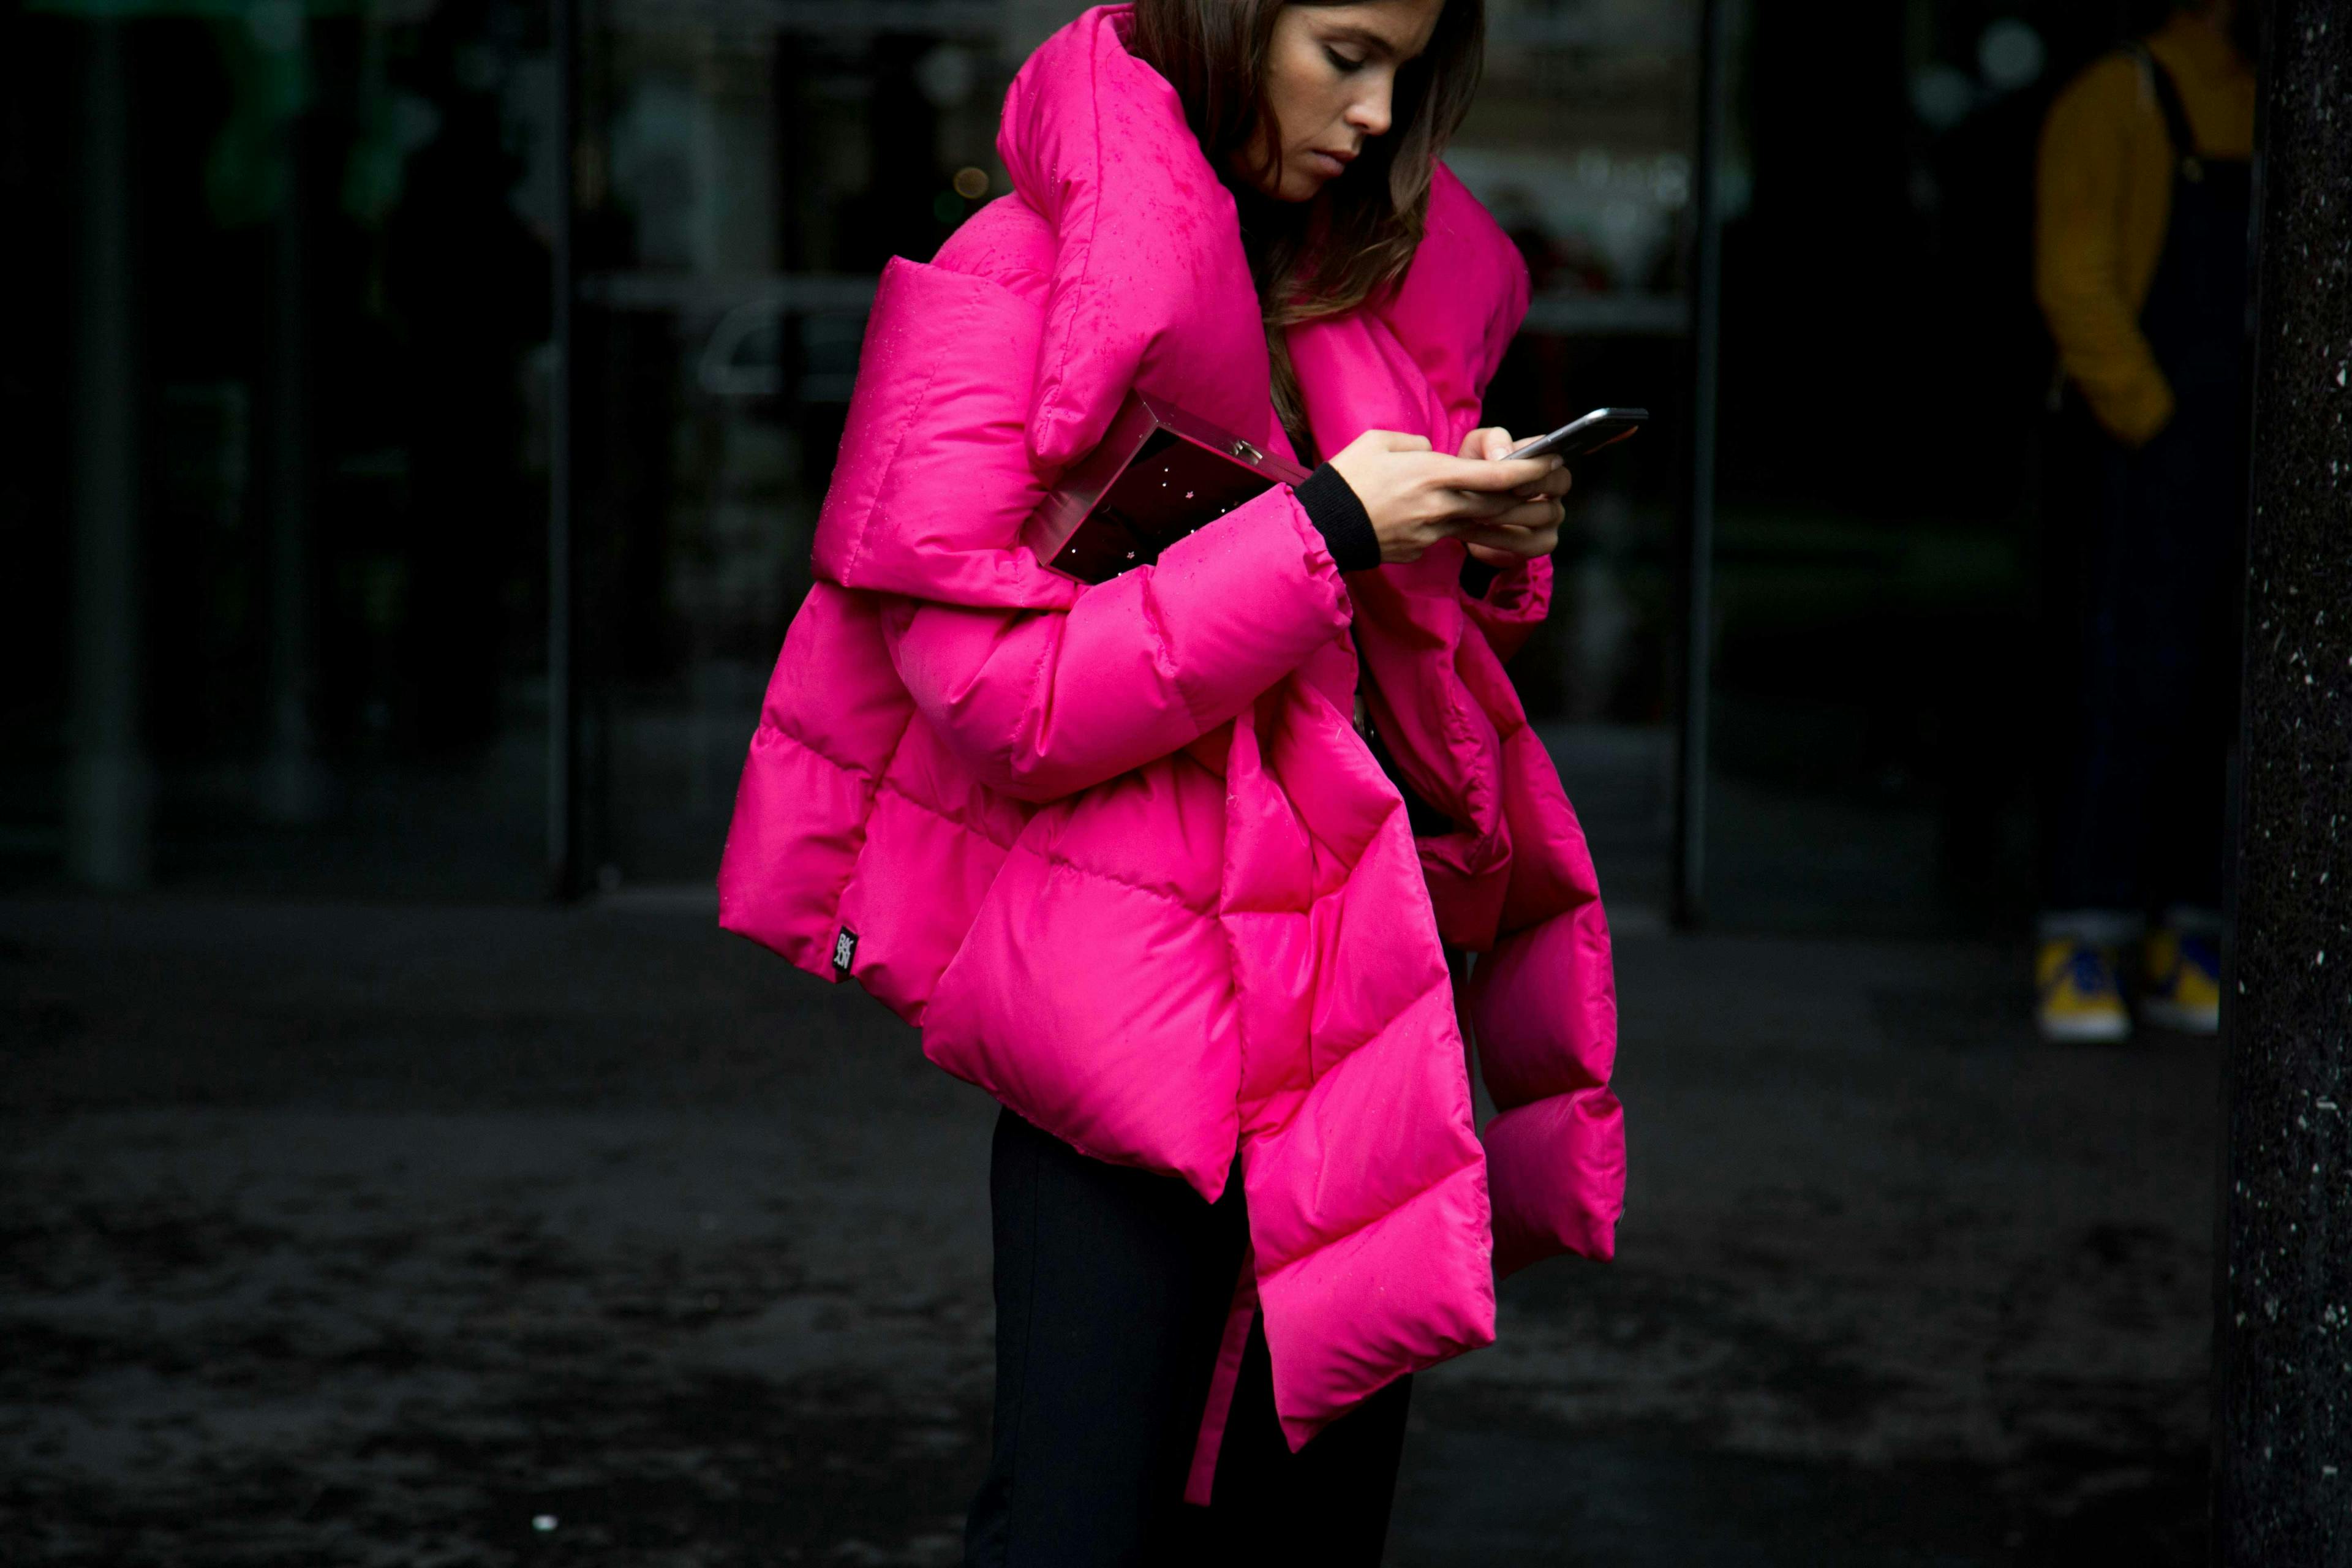 clothing apparel person human coat overcoat jacket phone electronics